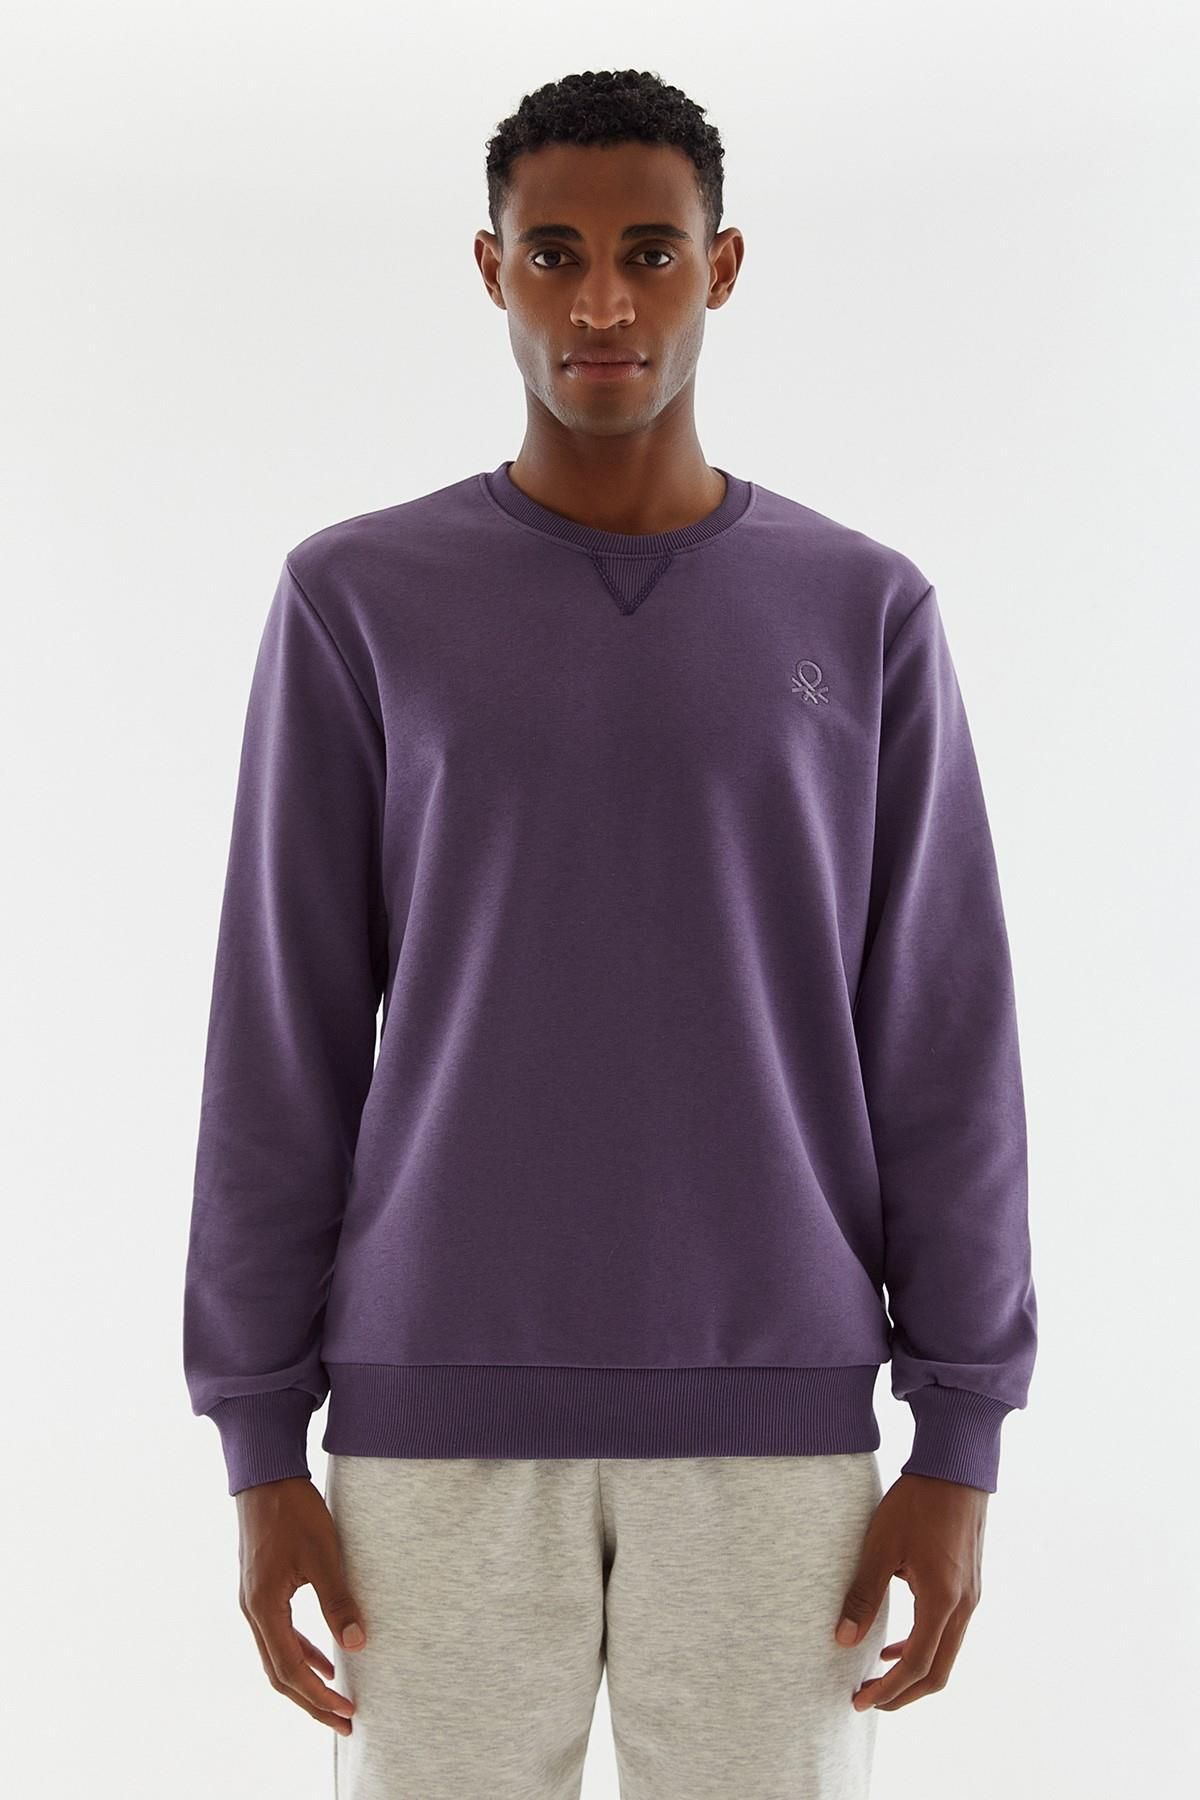 United Colors of Benetton Erkek Sweatshirt Bnt-m20951